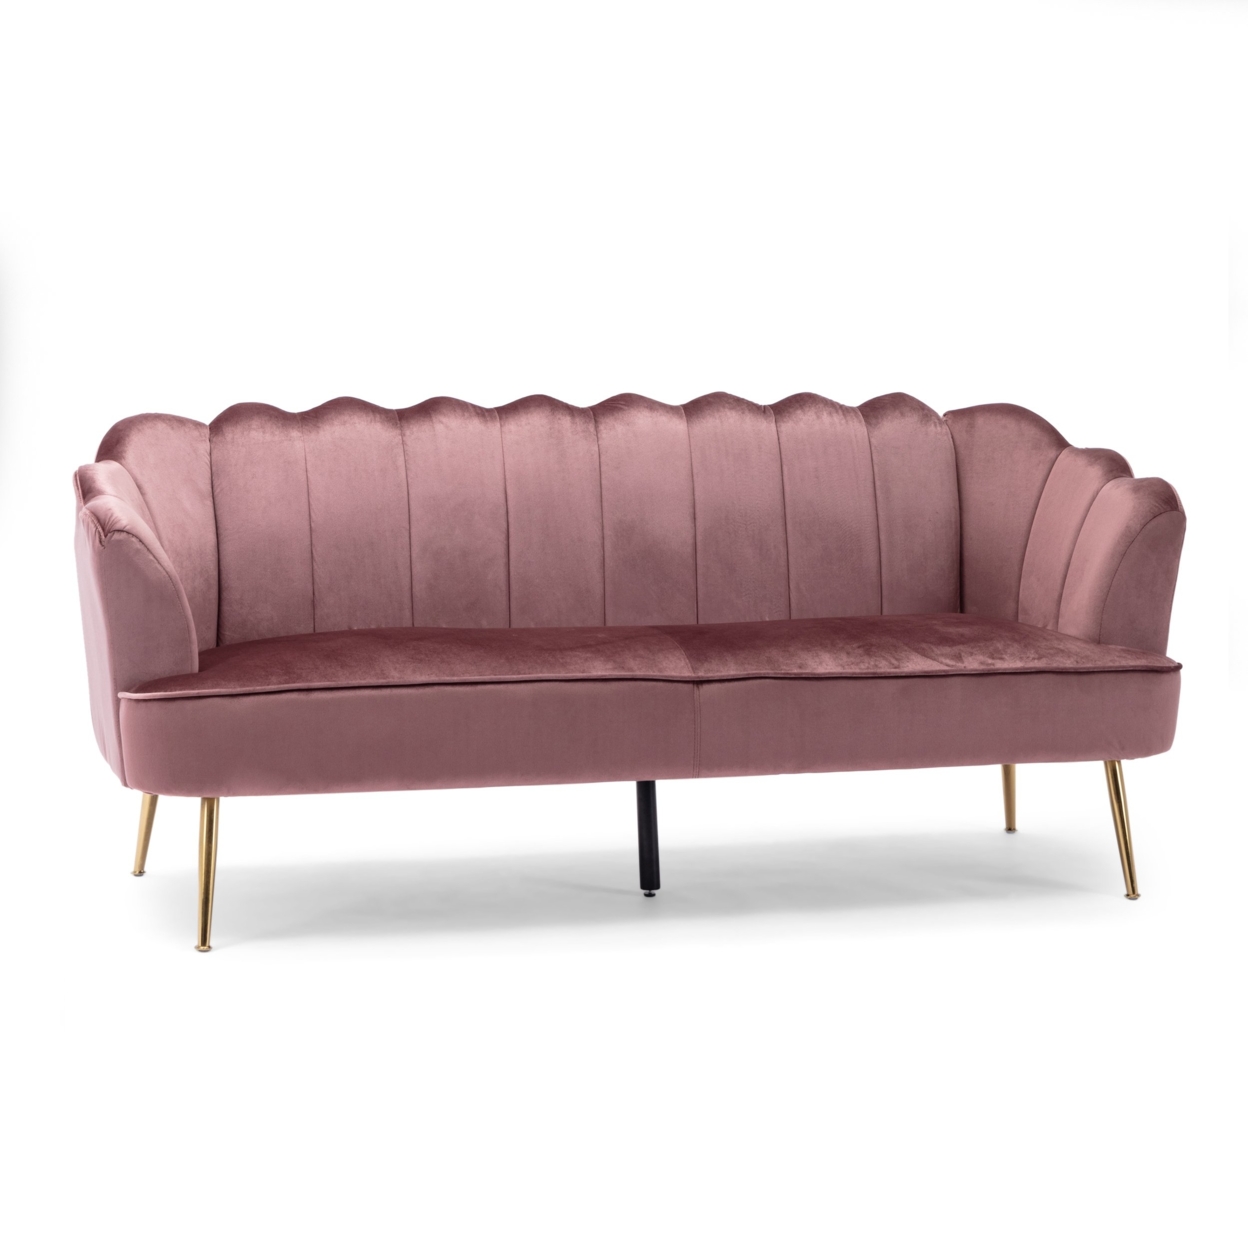 Ohnstad Modern Glam Velvet Channel Stitch 3 Seater Shell Sofa - Teal